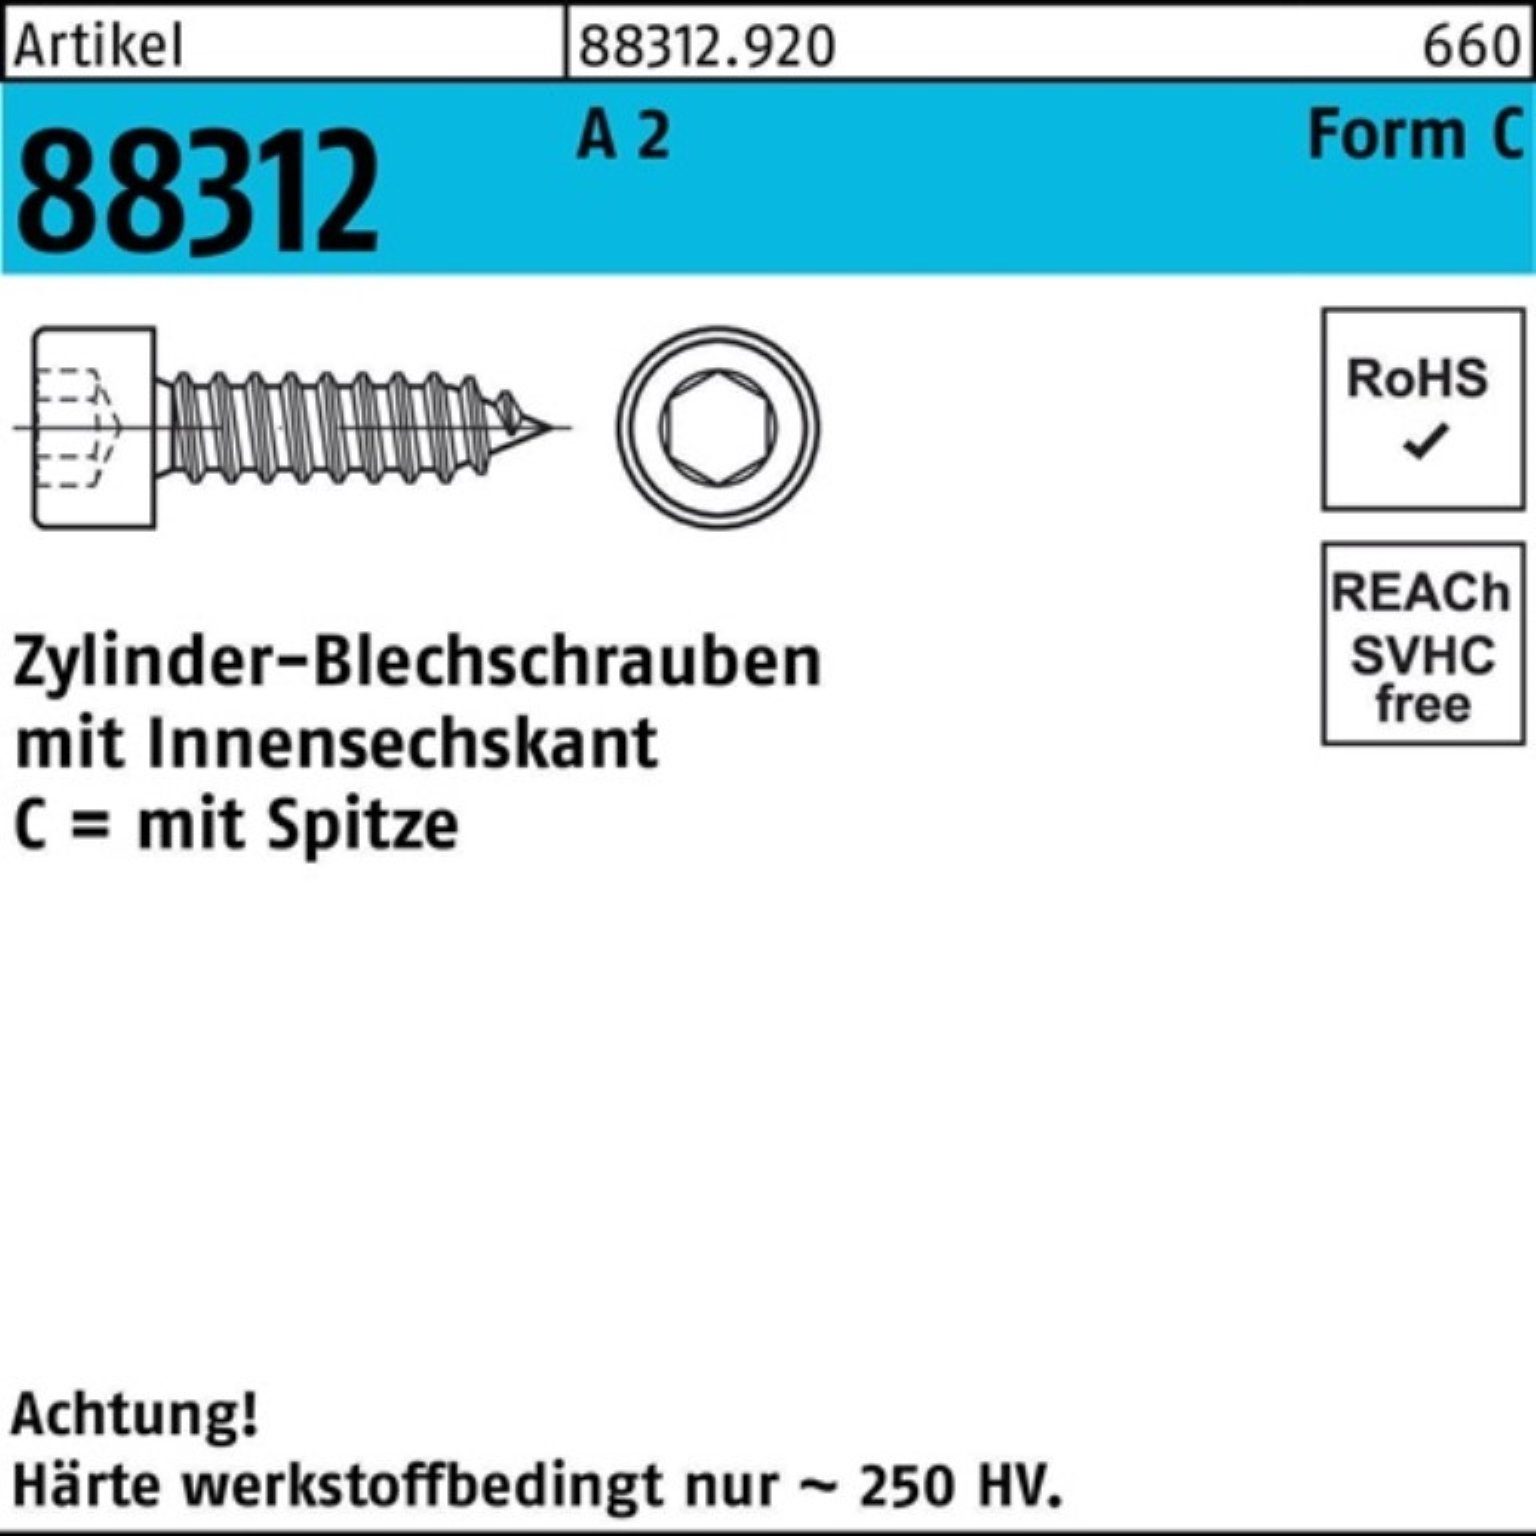 Reyher Blechschraube 200er Pack Zylinderblechschraube R 88312 Spitze/Innen-6kt C 5,5x 32 A